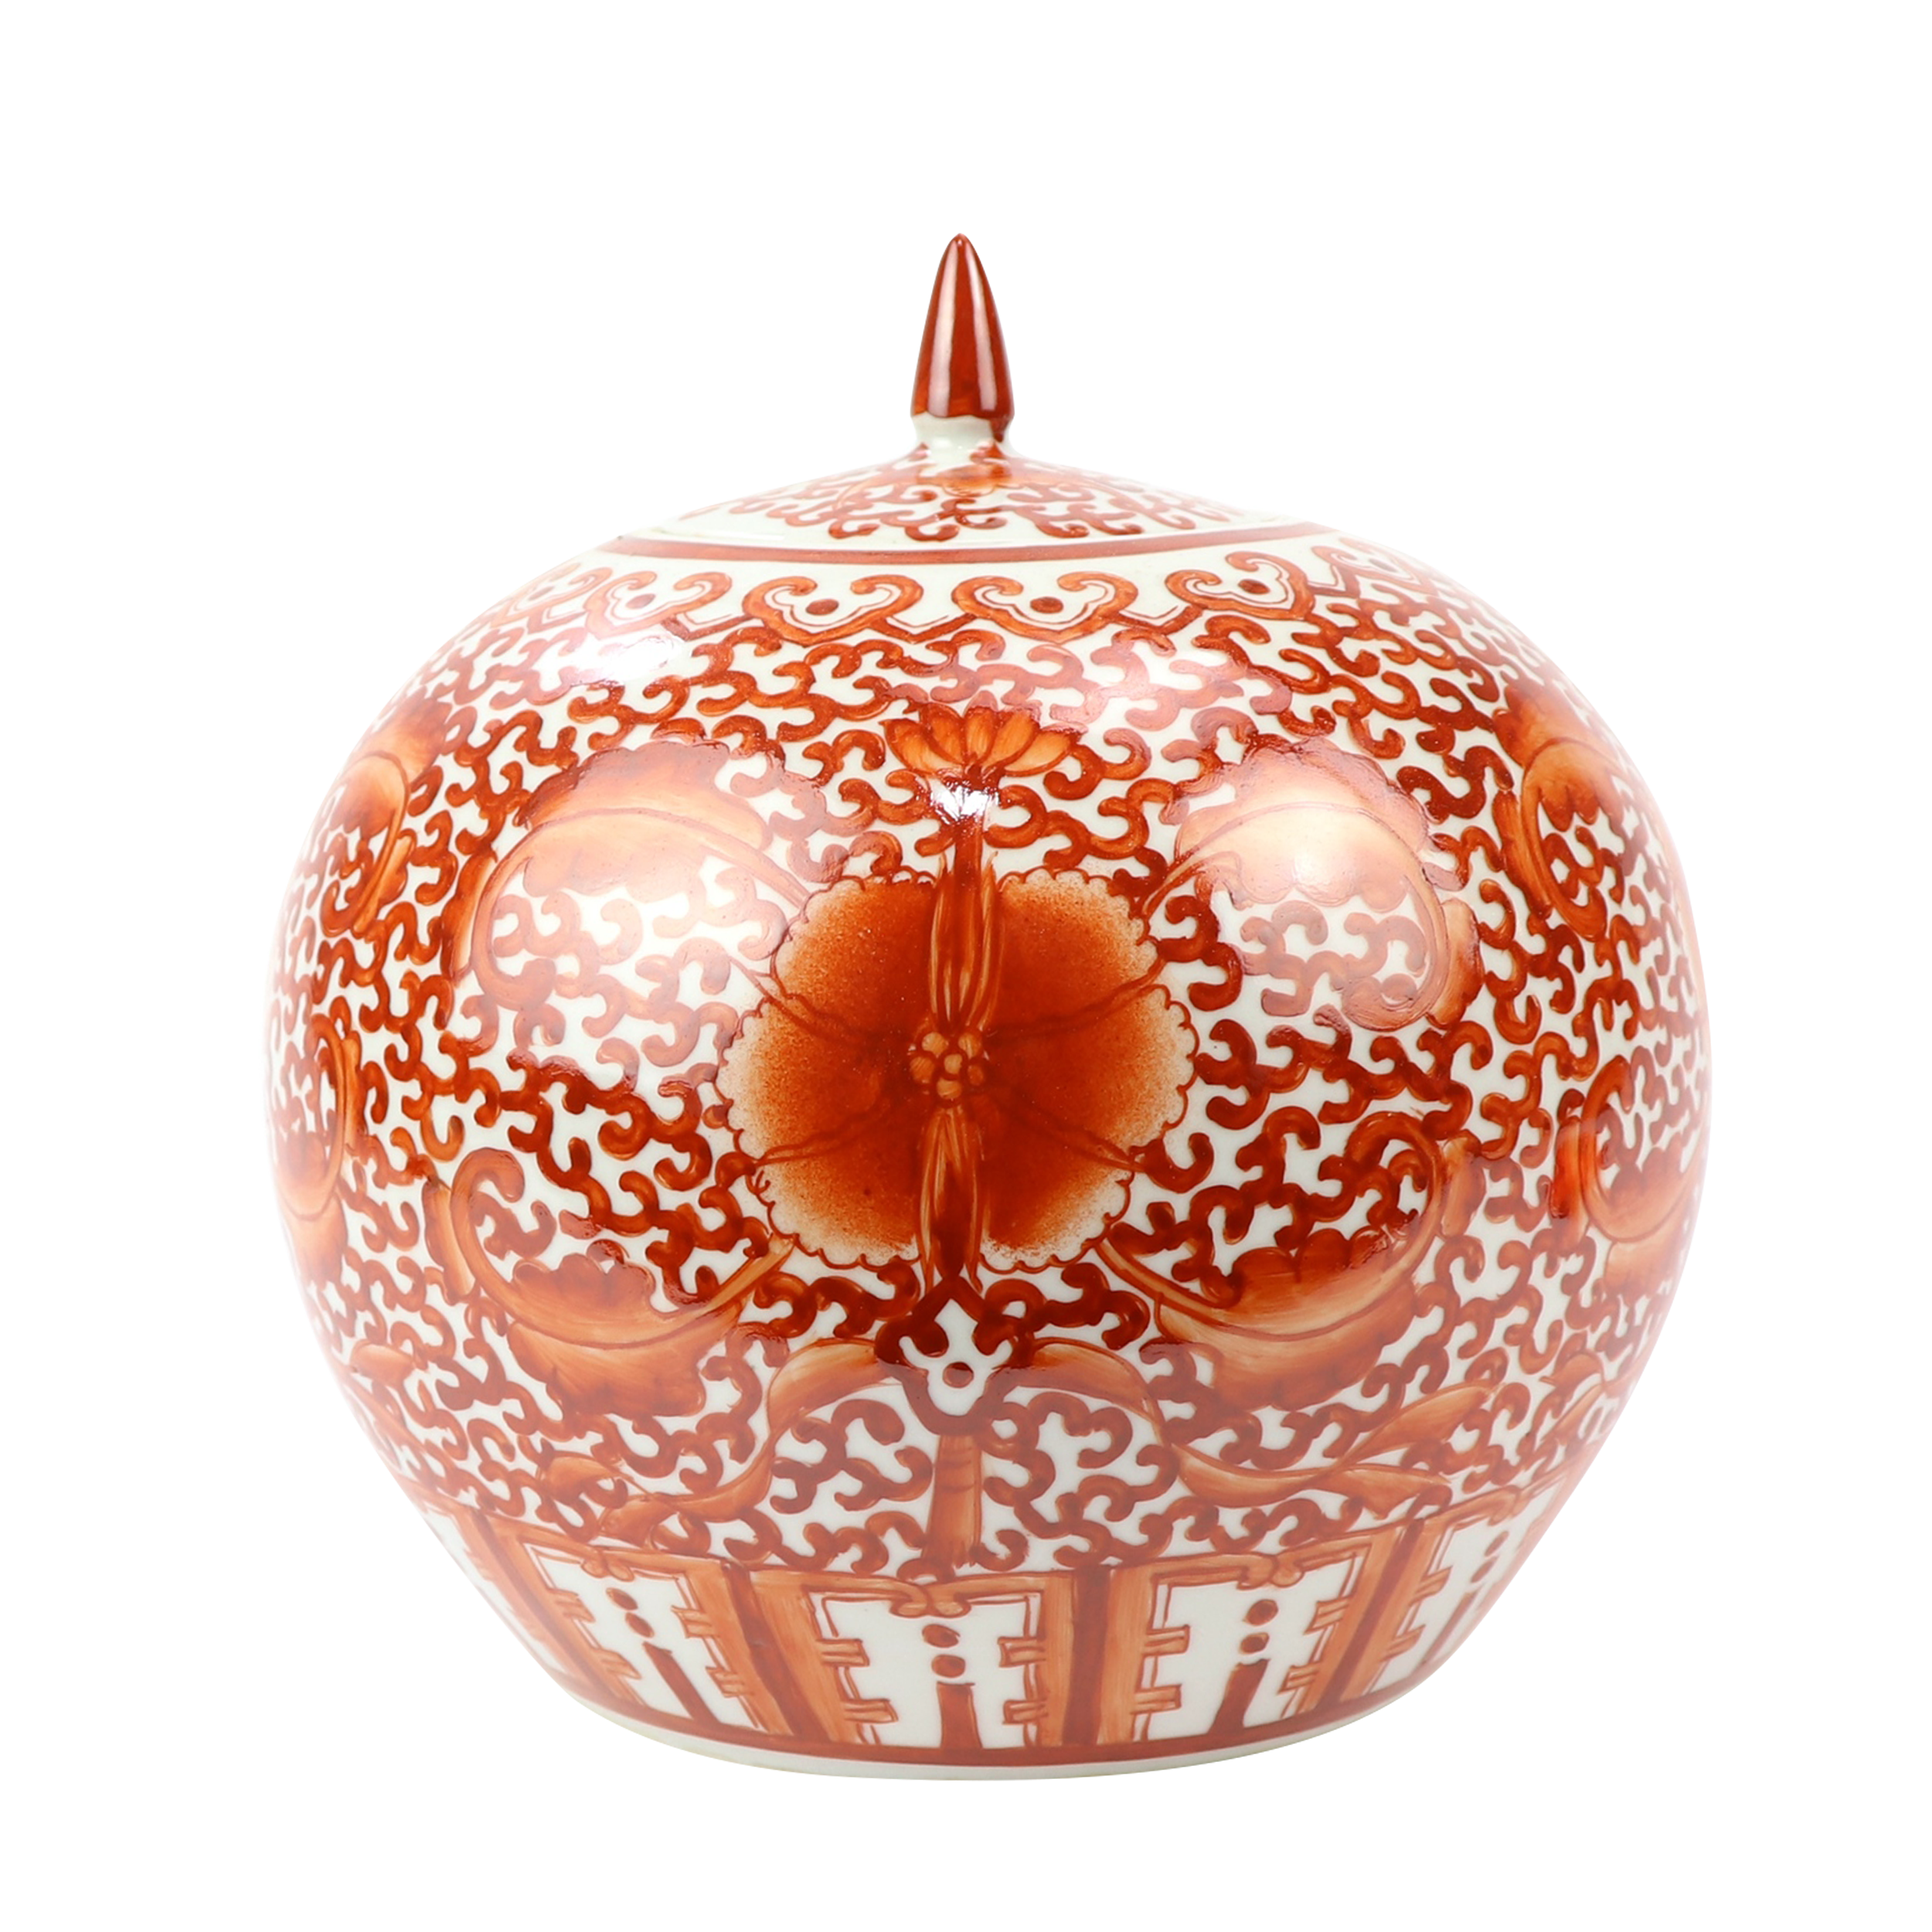 A Knowledge of pastel ceramics Chinese Ceramic Art——